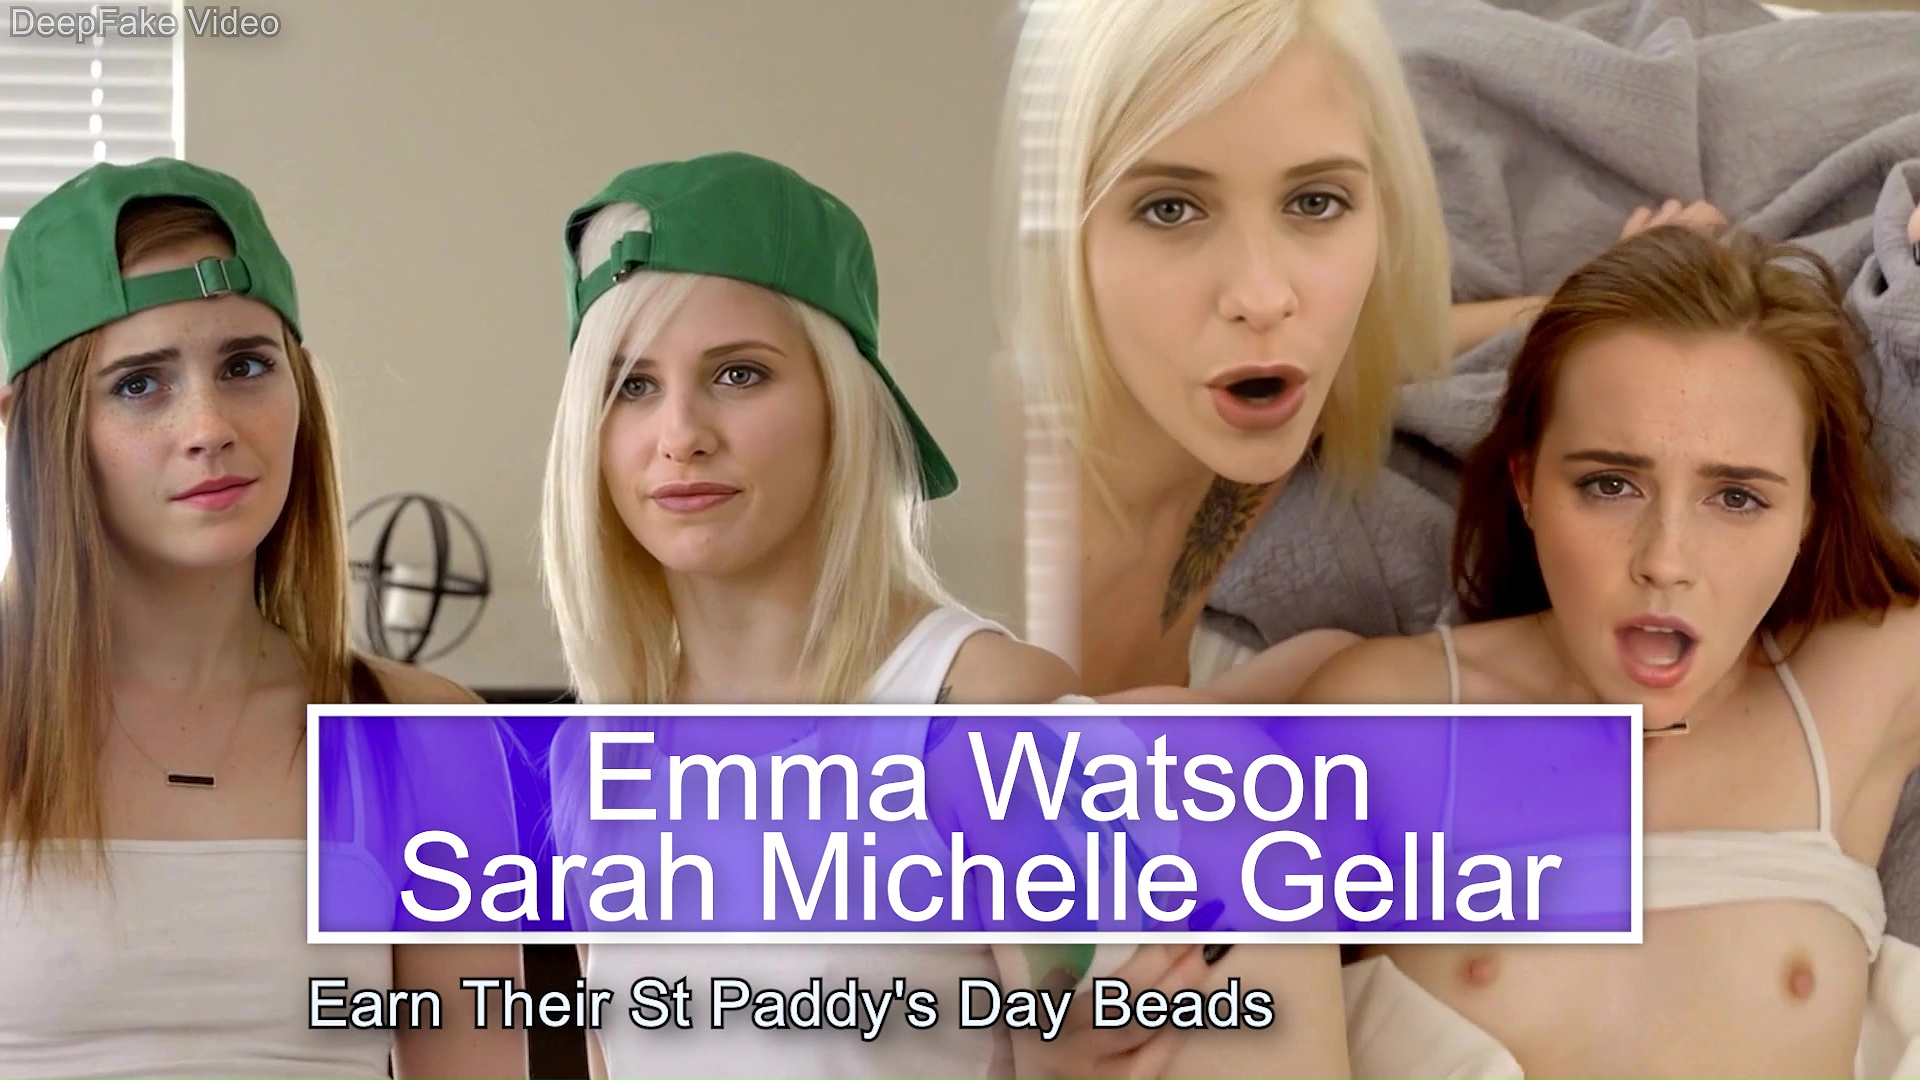 Emma Watson and Sarah Michele Gellar - Earn Their St Paddy's Day Beads - Trailer